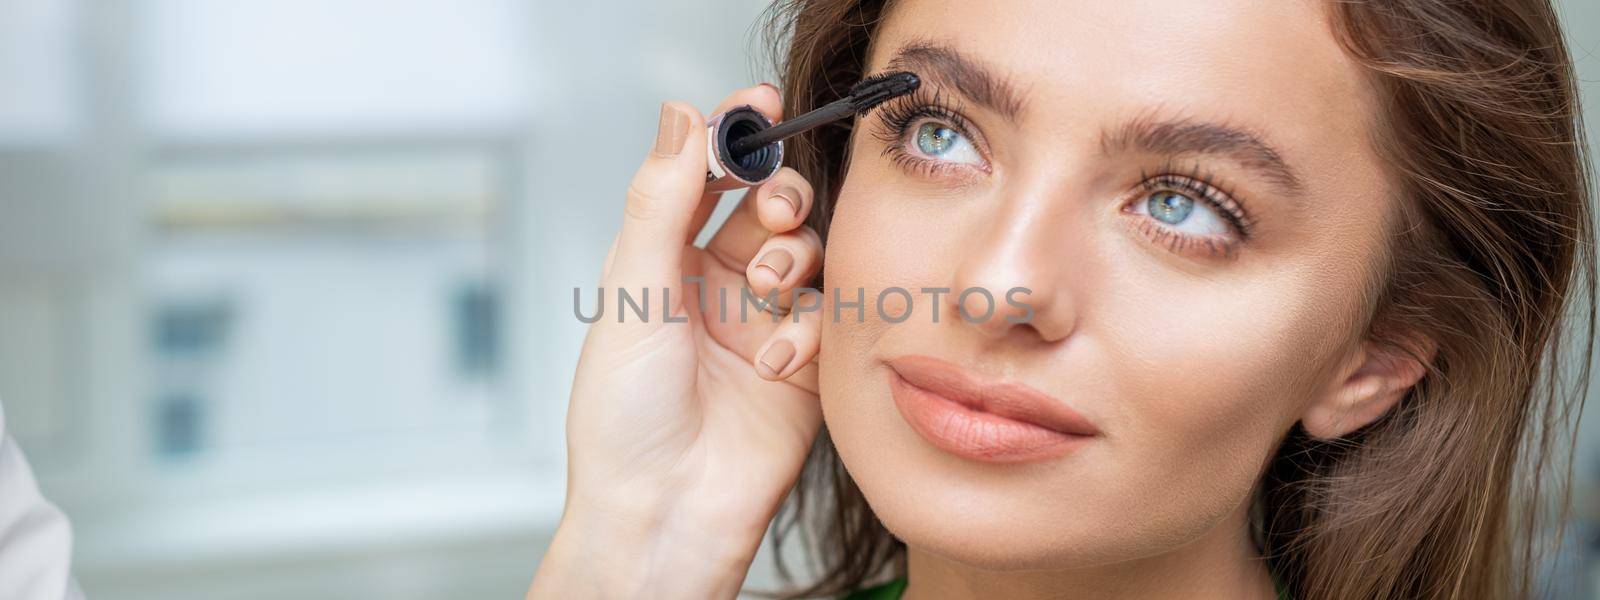 Makeup artist applying mascara on lashes by okskukuruza